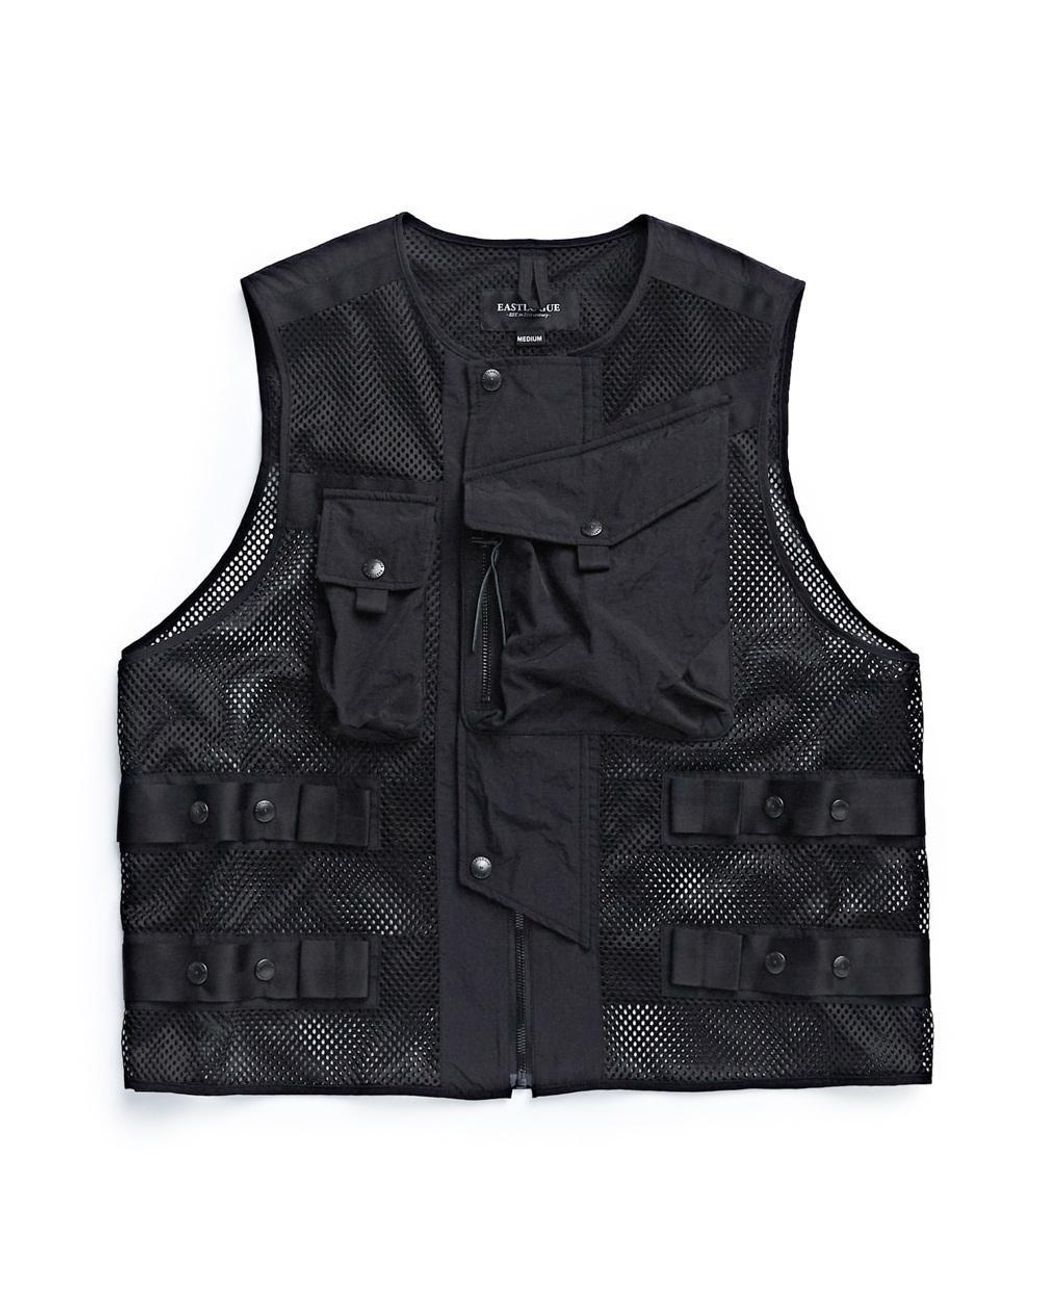 Eastlogue Synthetic Vest in Black for Men - Lyst